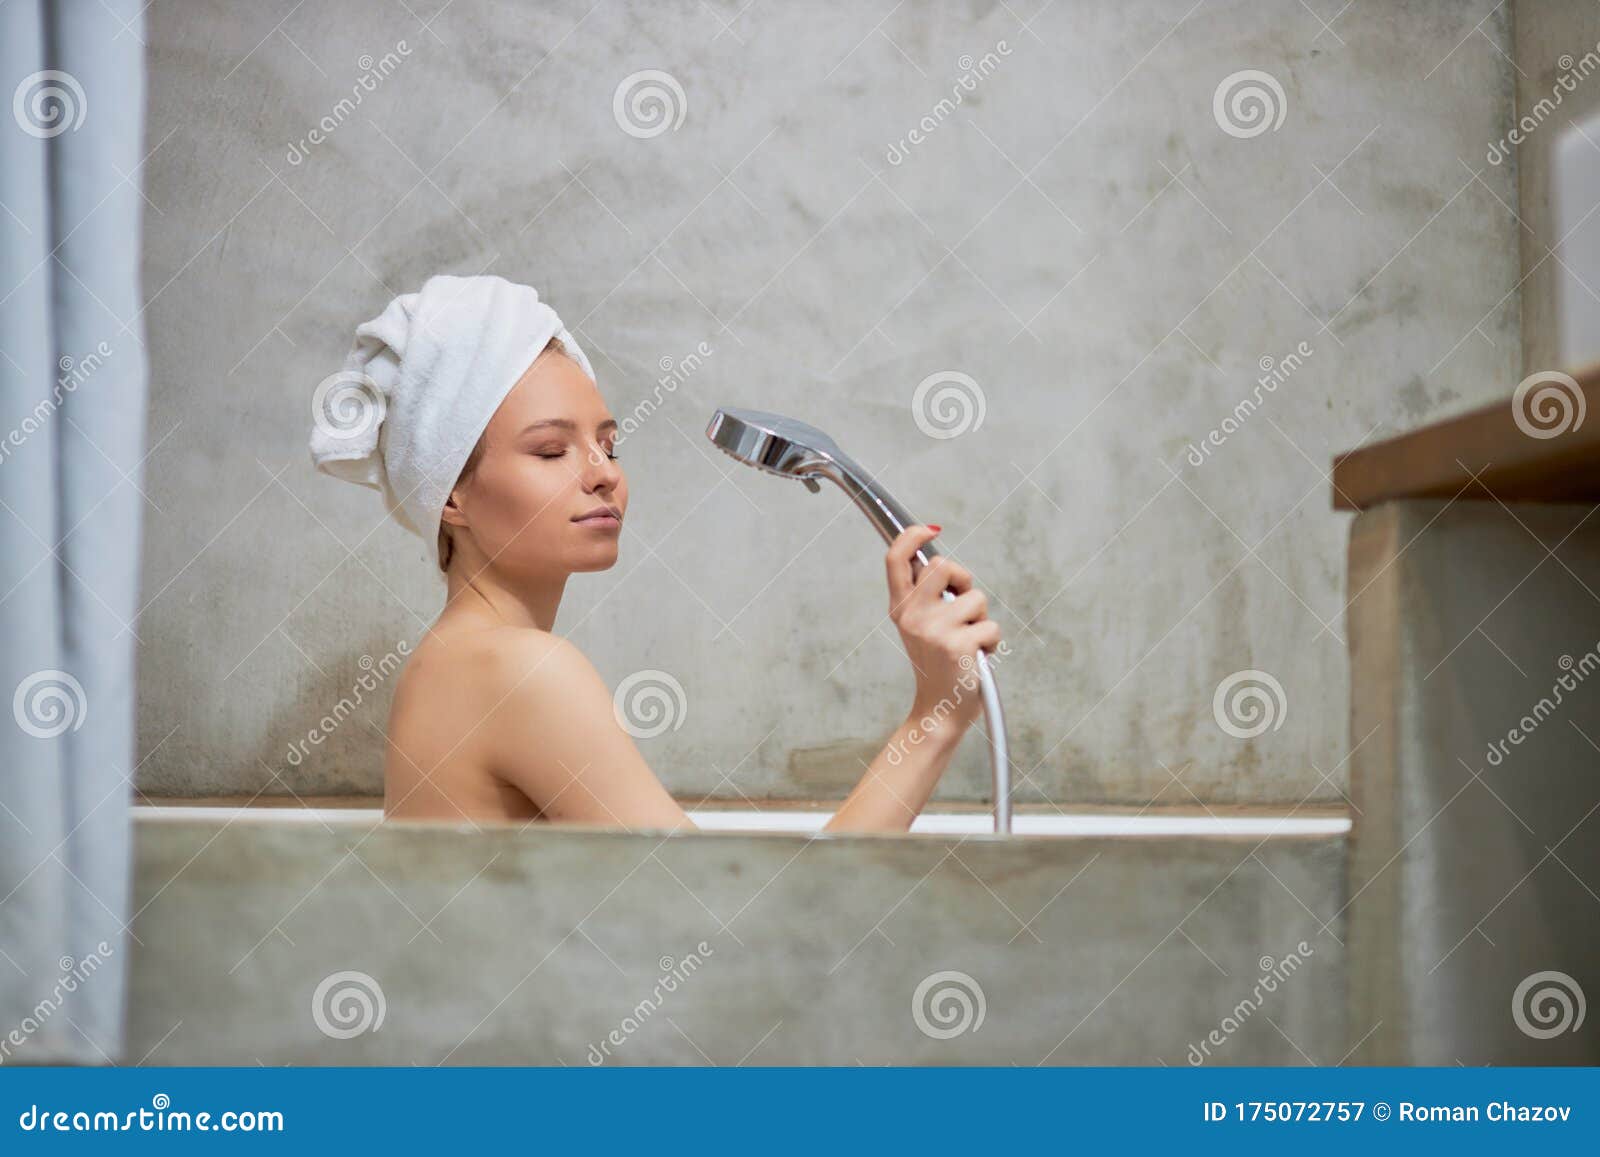 Young Beautiful Woman Take Bath Stock Image - Image of body, interior:  175072757